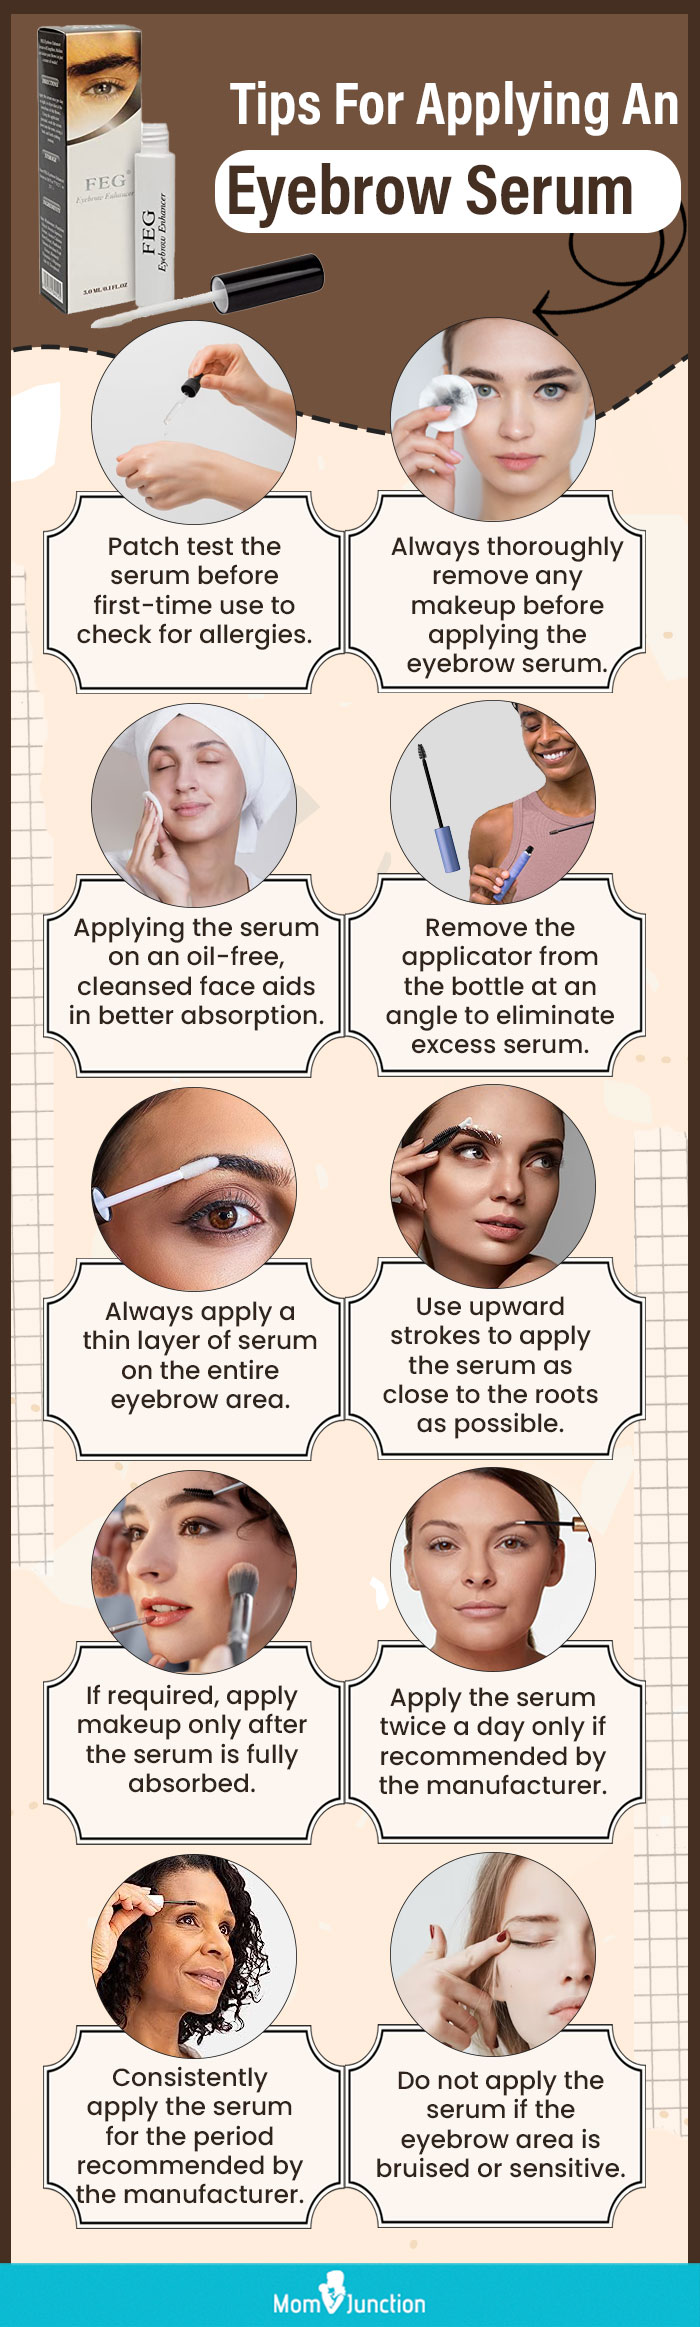 Tips For Applying An Eyebrow Serum (infographic)